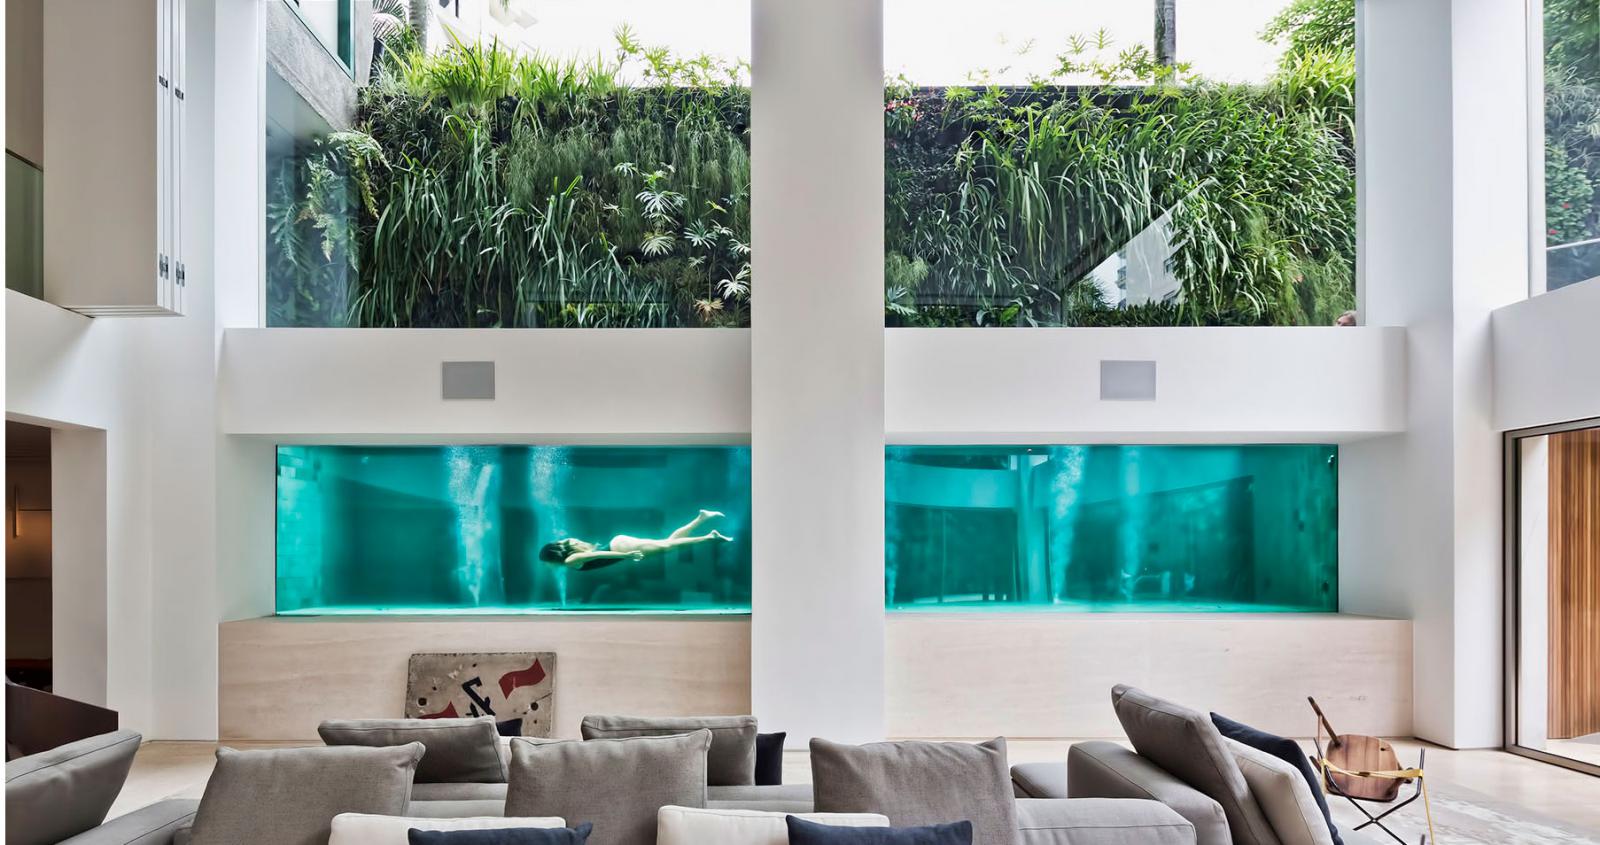 Квартира с бассейном по проекту архитектора Фернанды Маркес